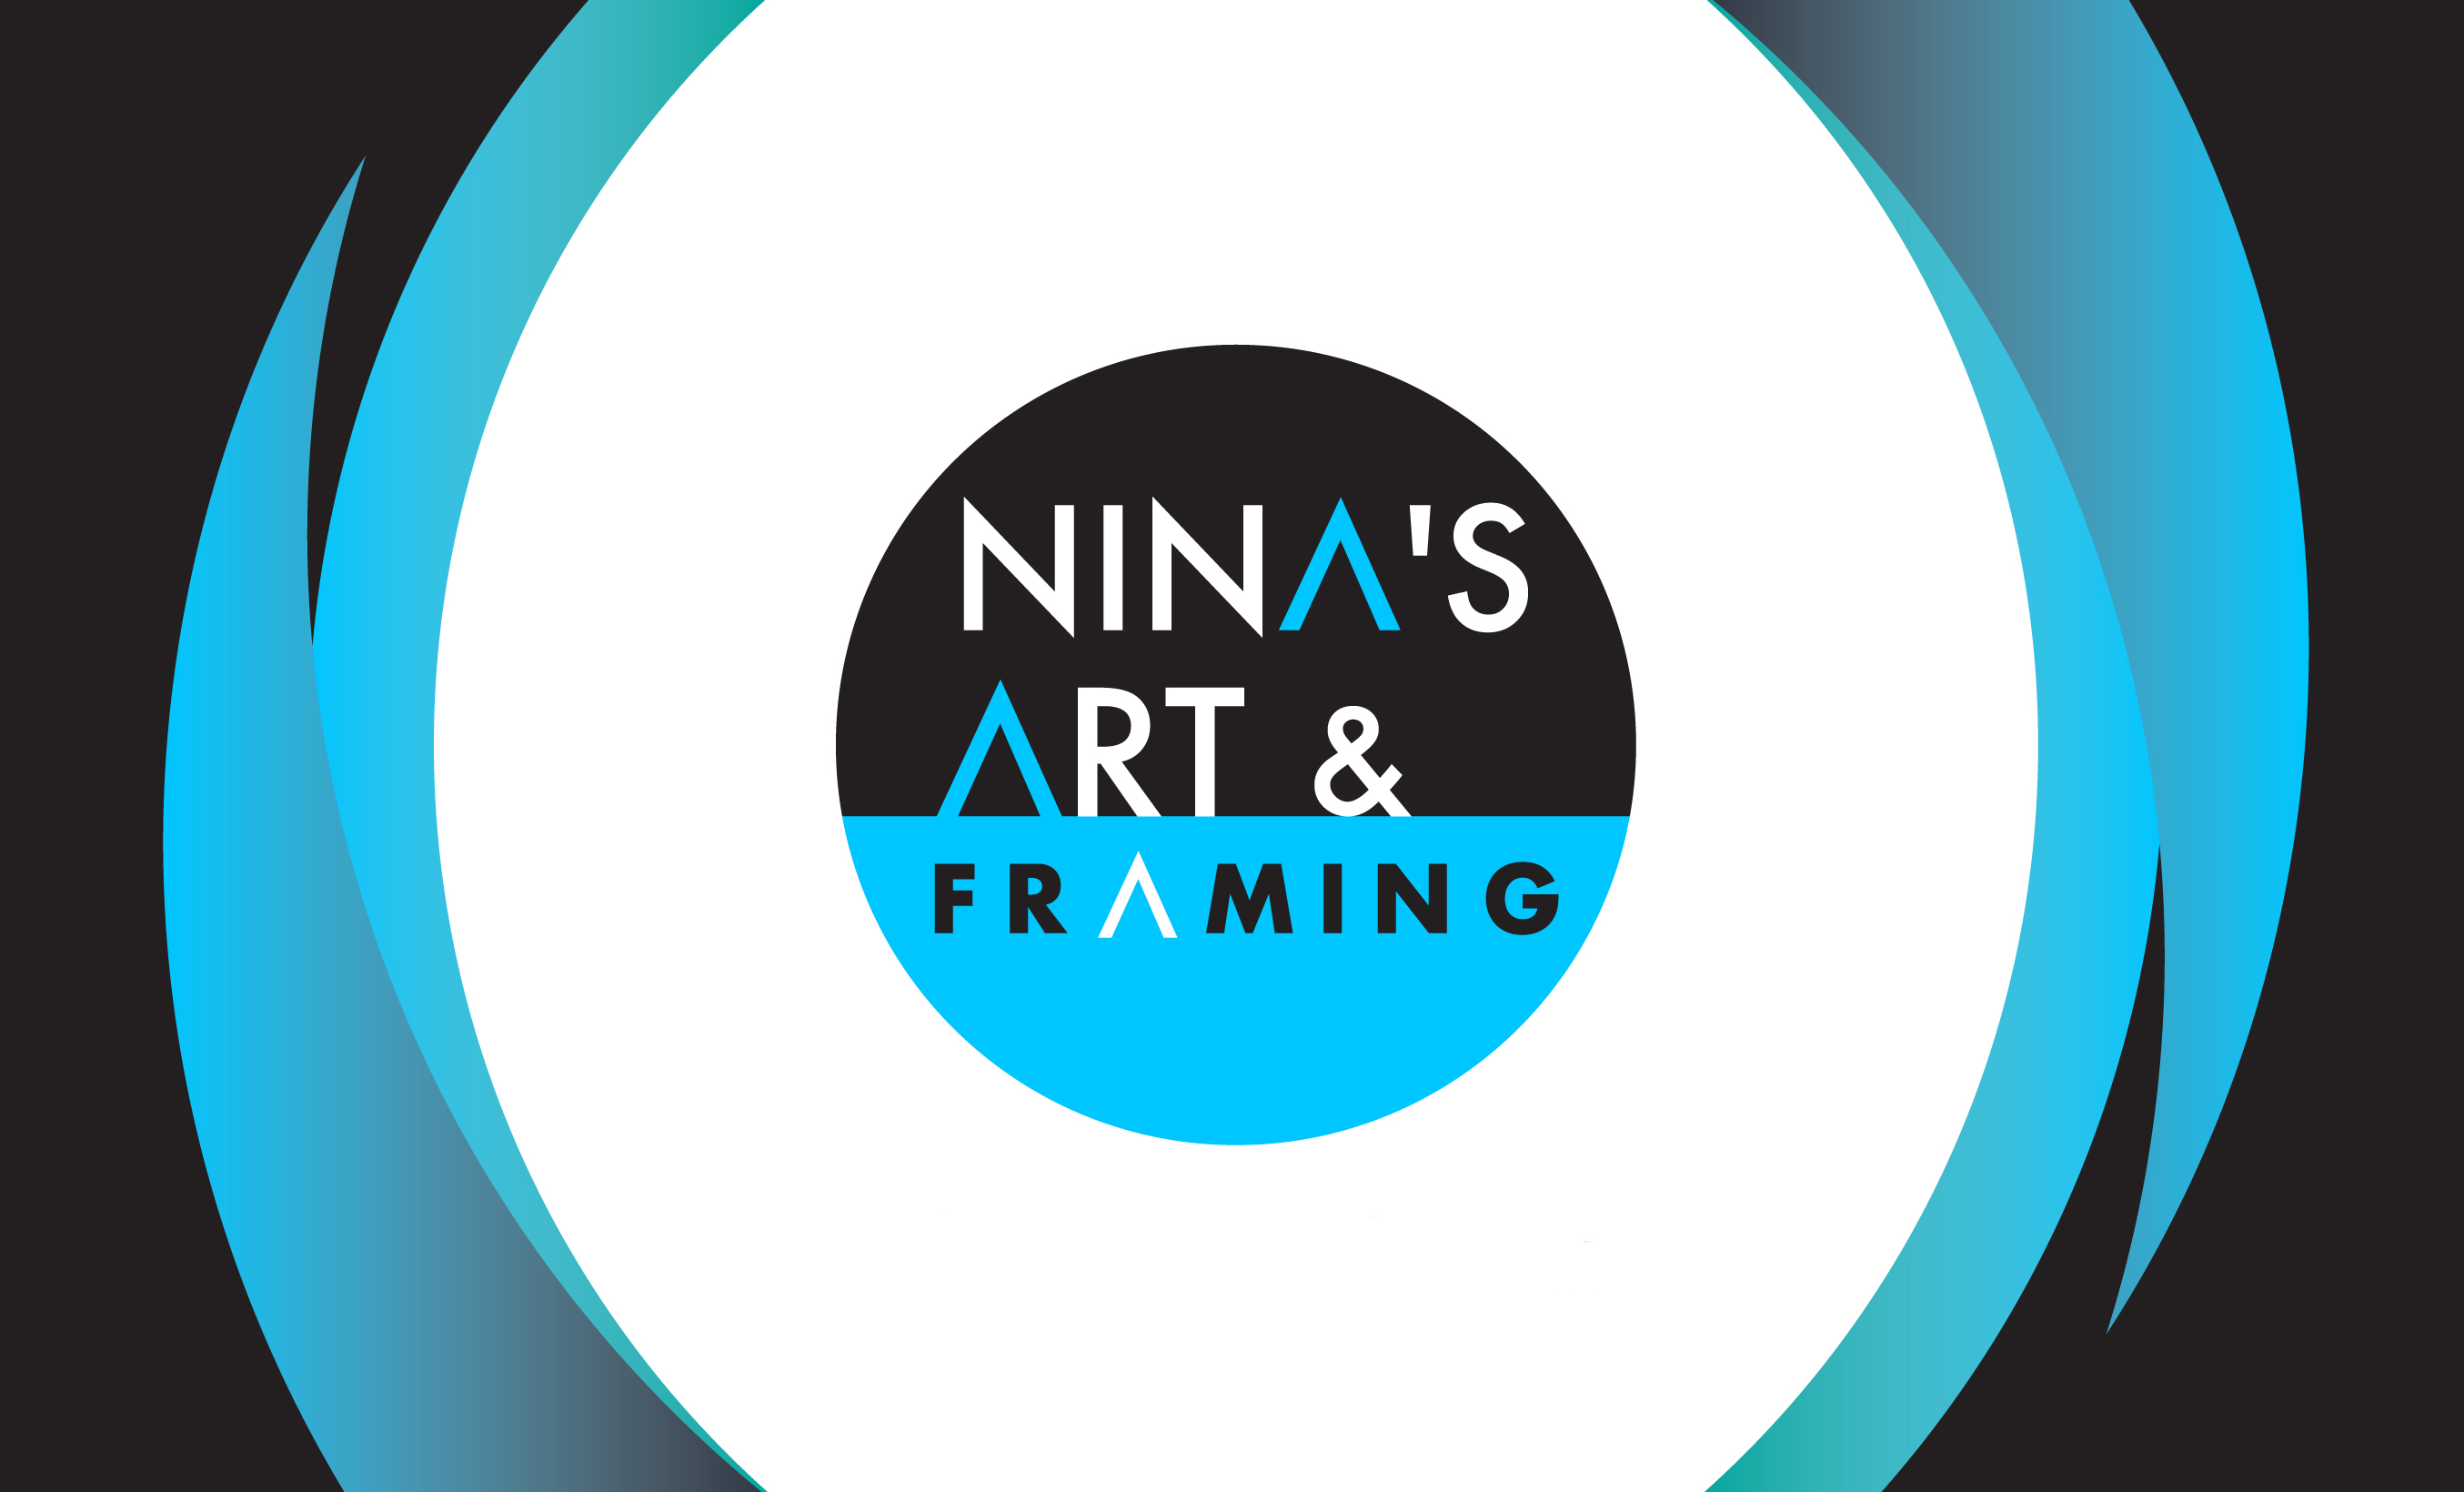 NINA'S ART & FRAMING